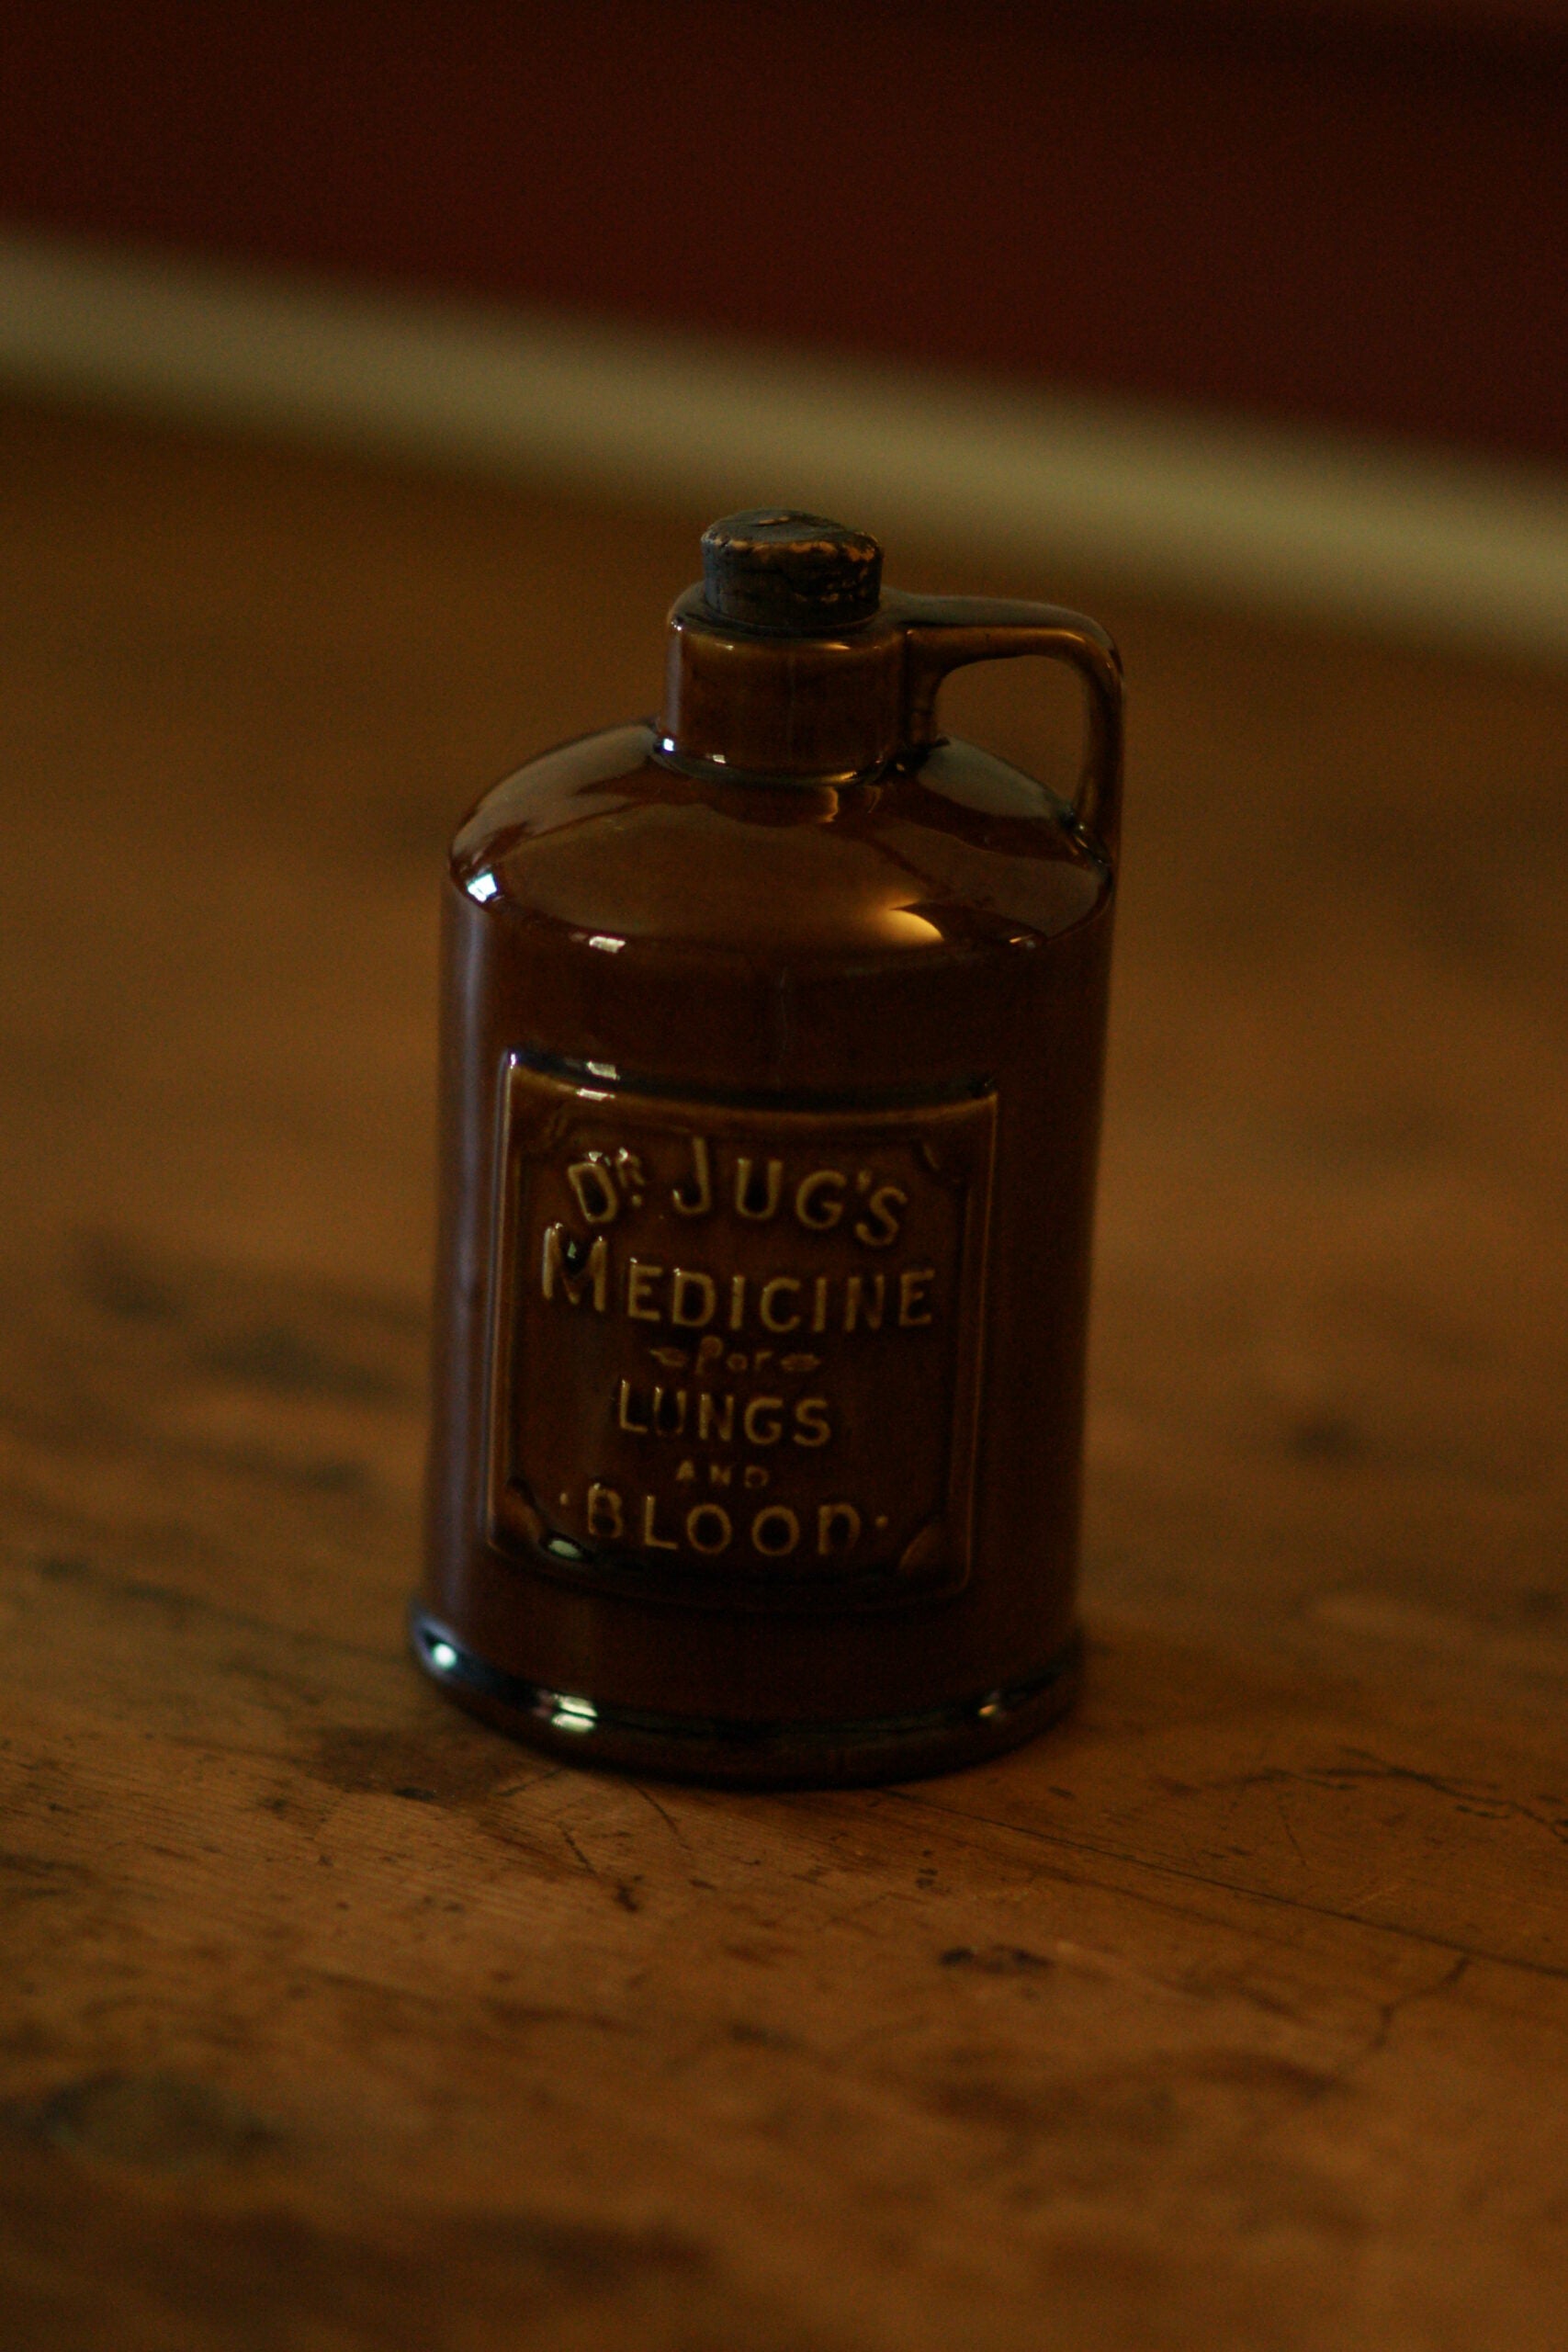 A brown glass medicine bottle